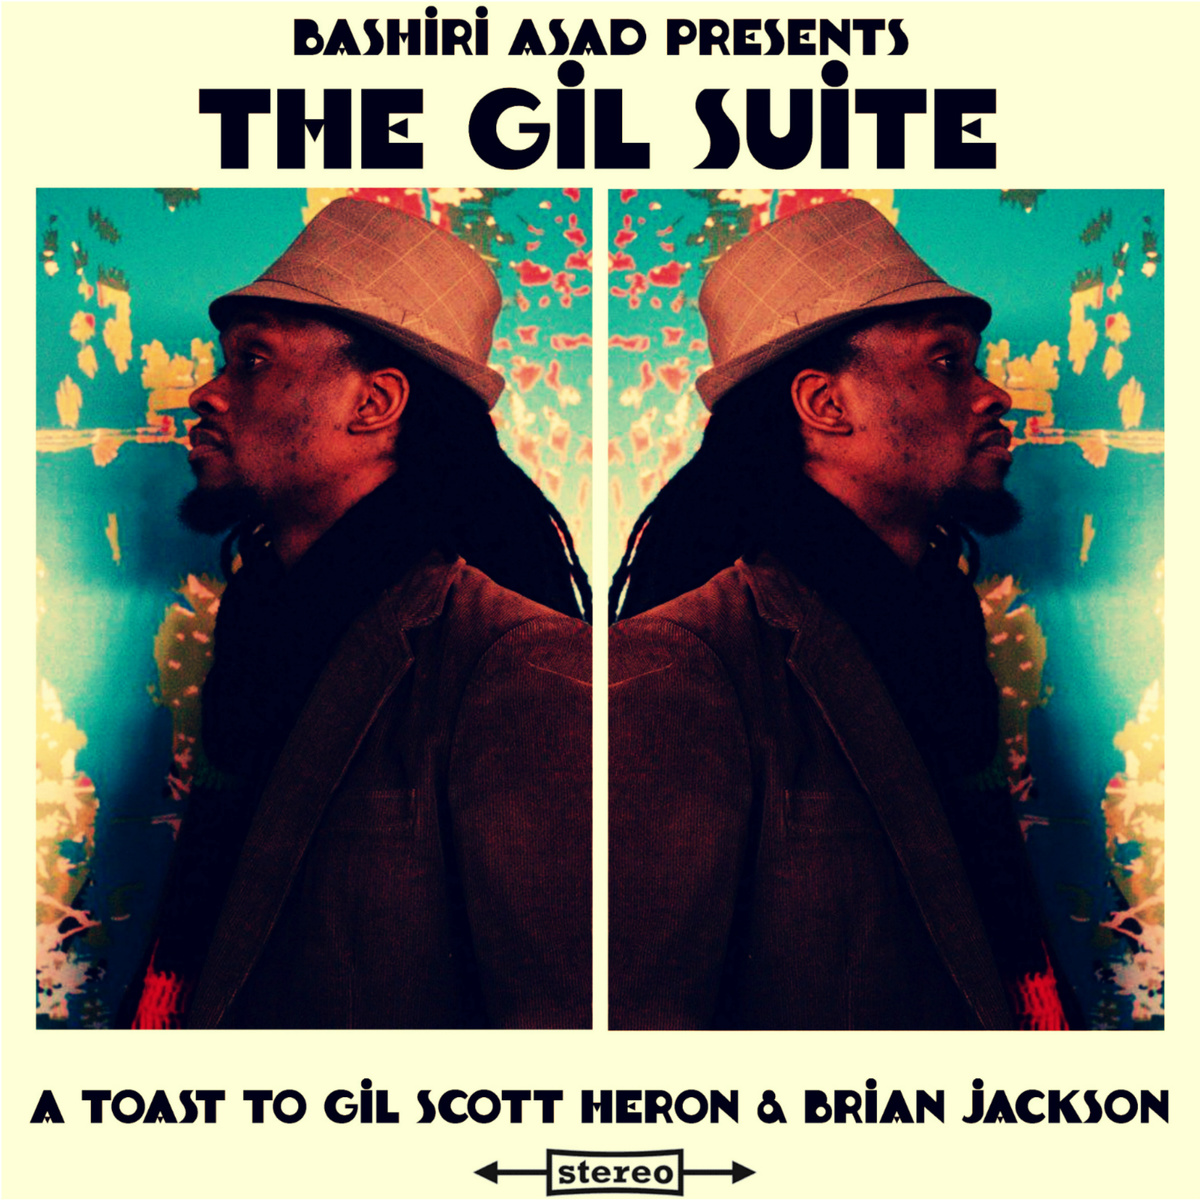 Bashiri Asad "The Gil Suite" Release | @Bashiri08